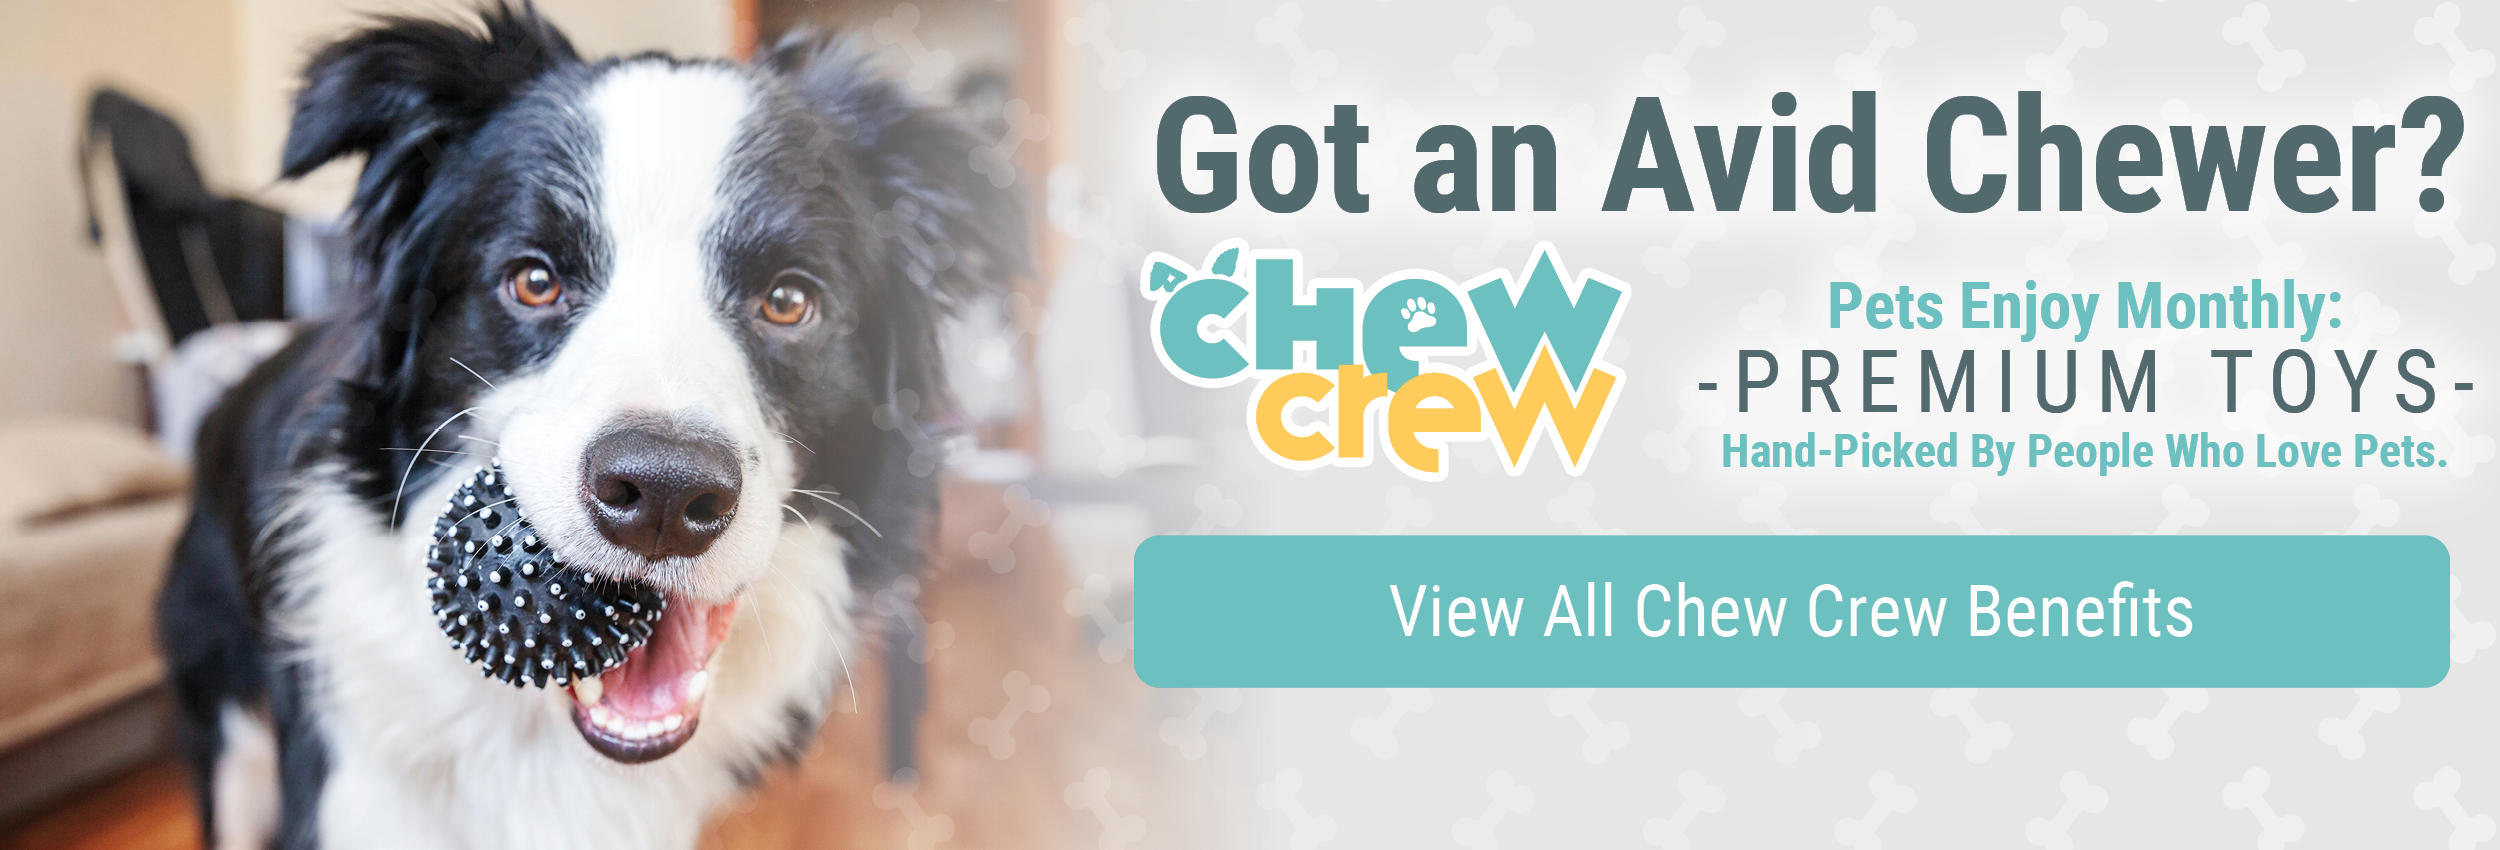 Got an Avid Chewer? Chew Crew Pets Enjoy Premium Toys Every Month!